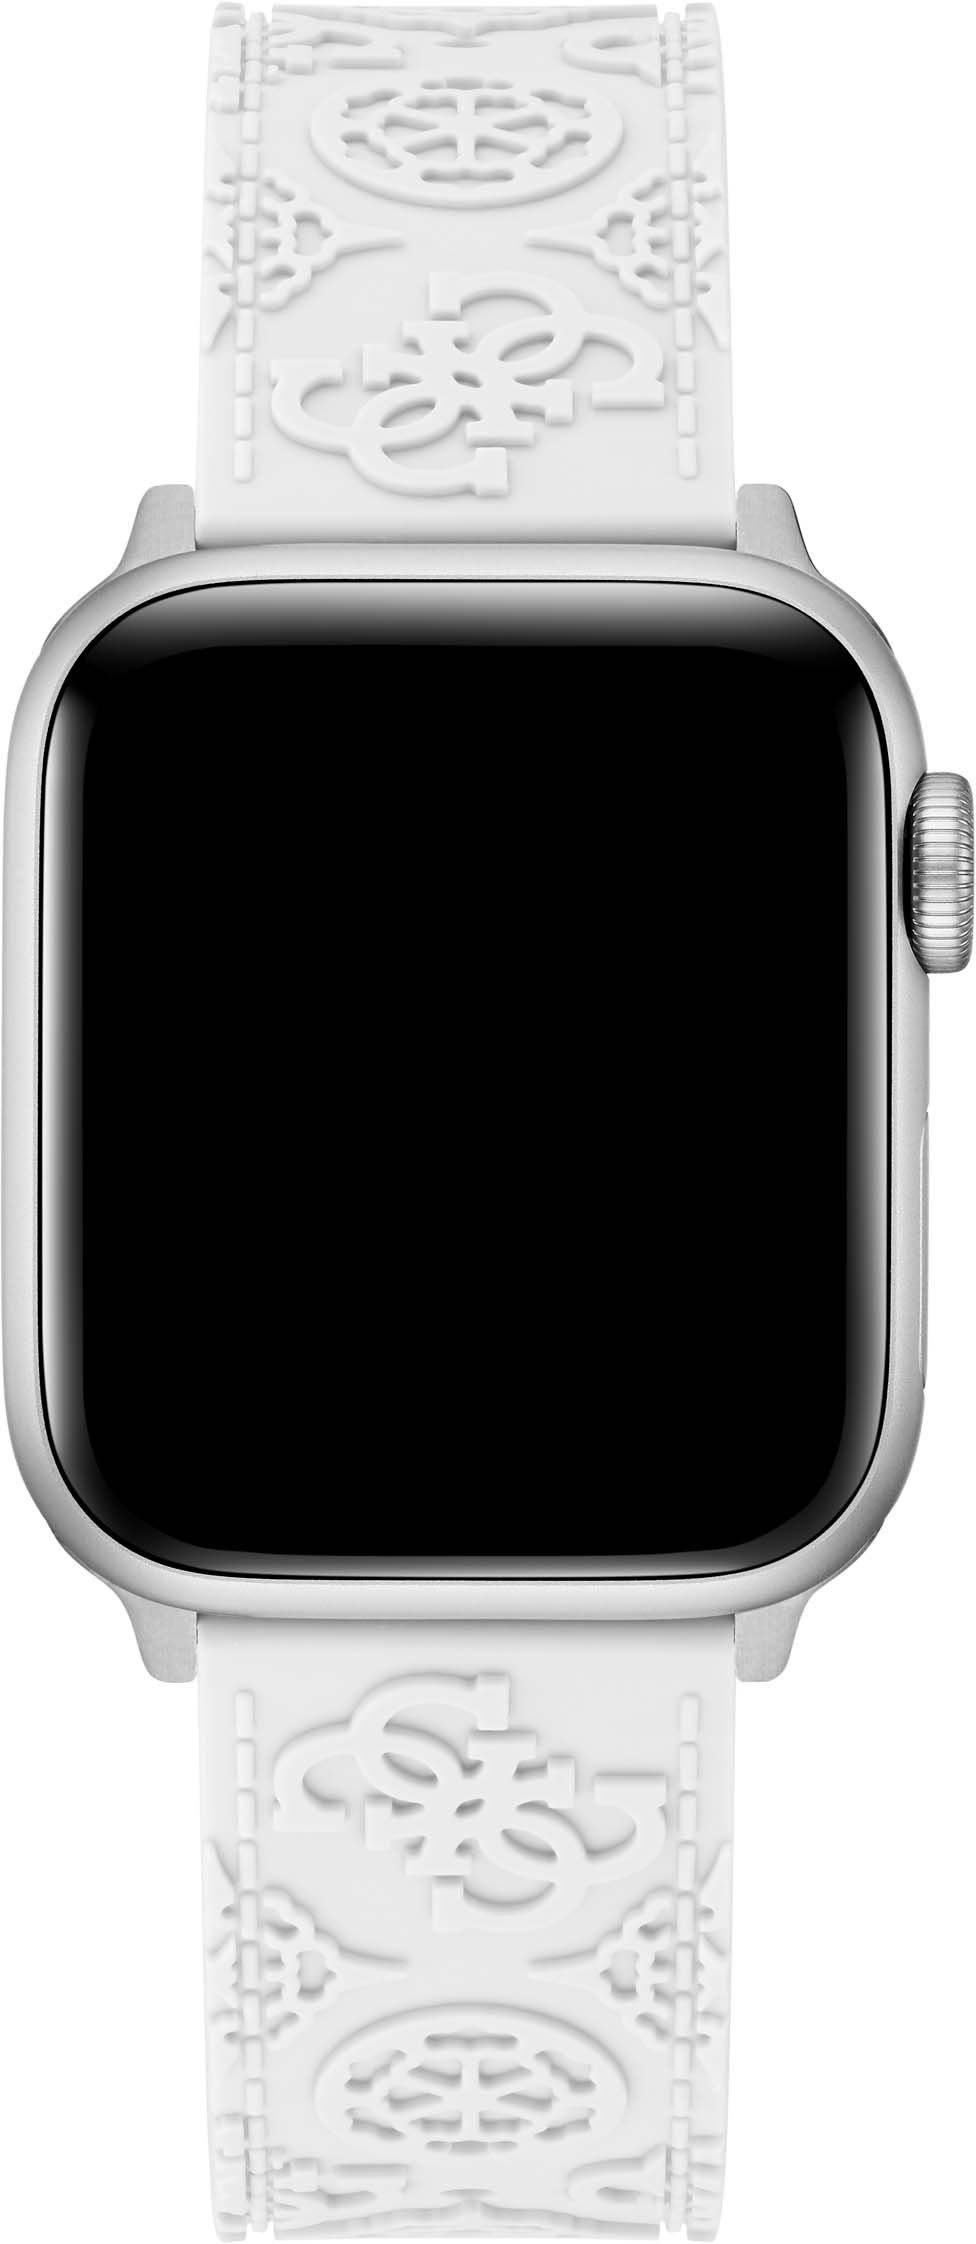 Guess Smartwatch-Armband CS2003S1, Wechselarmband, Ersatzband, Silikon, passend für die Apple Watch